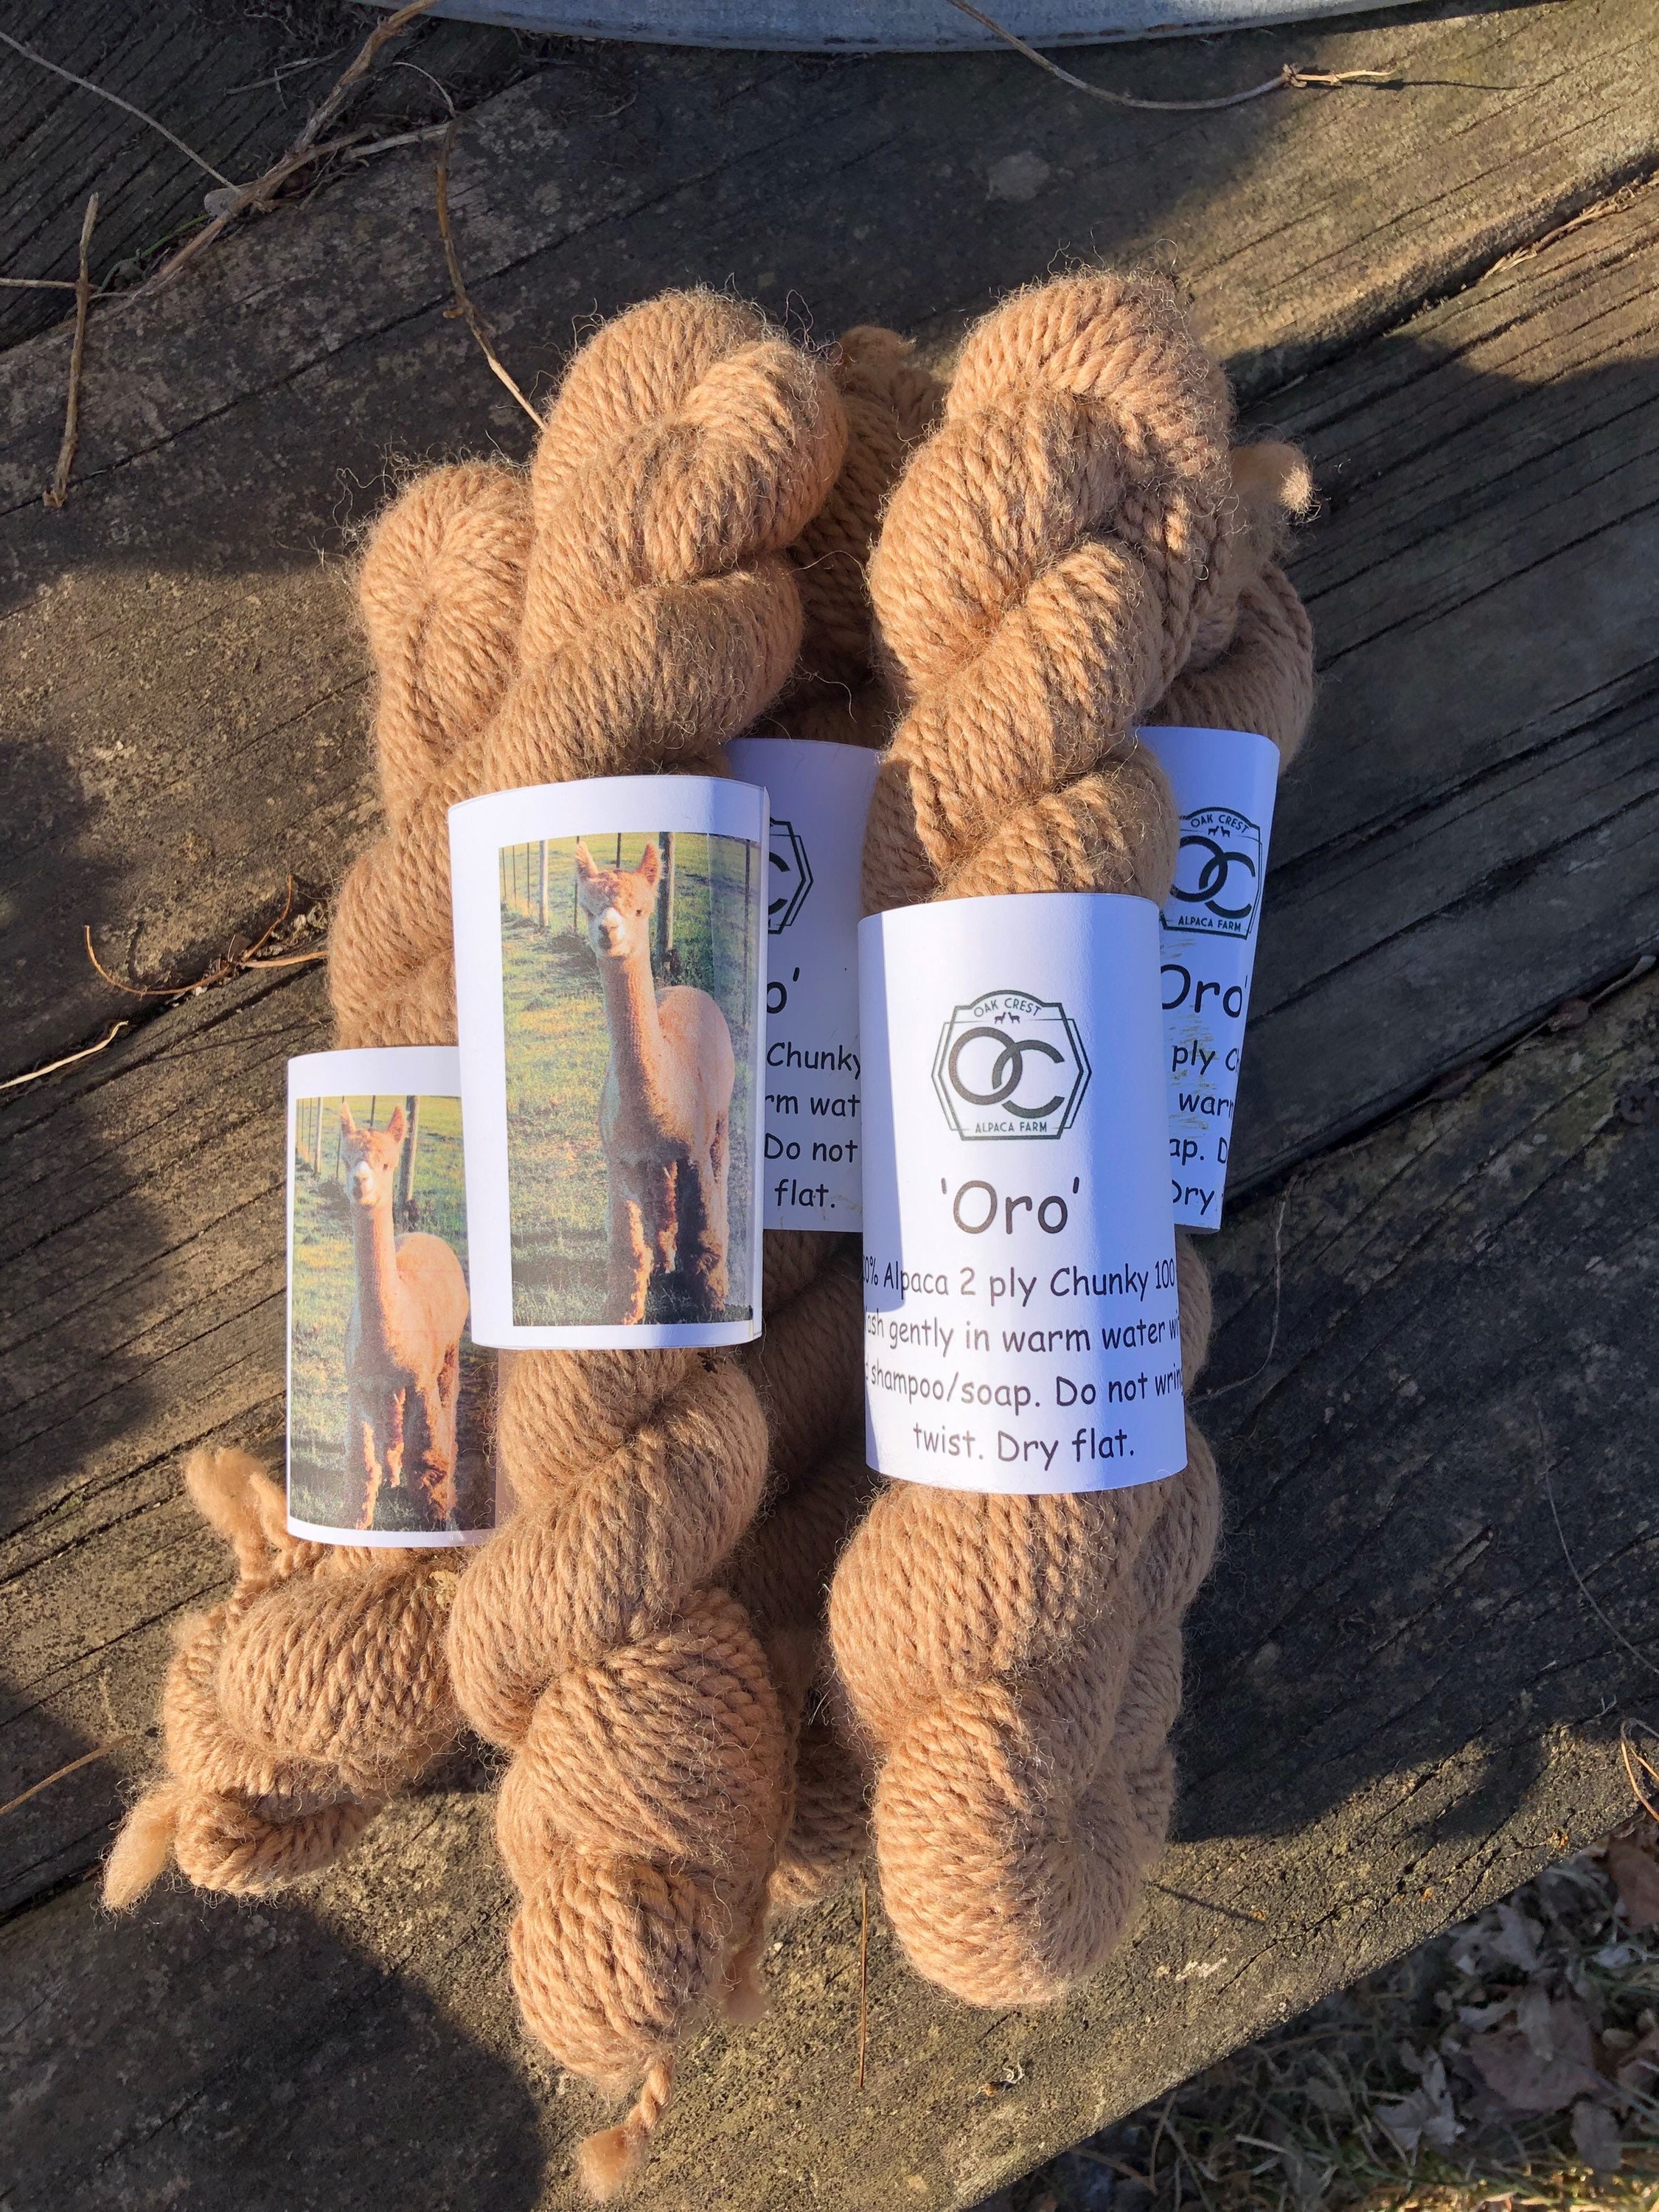 Pudgy 5 Pounds (200 Yards) – Super Bulky Merino Wool Yarn – MANUOSH